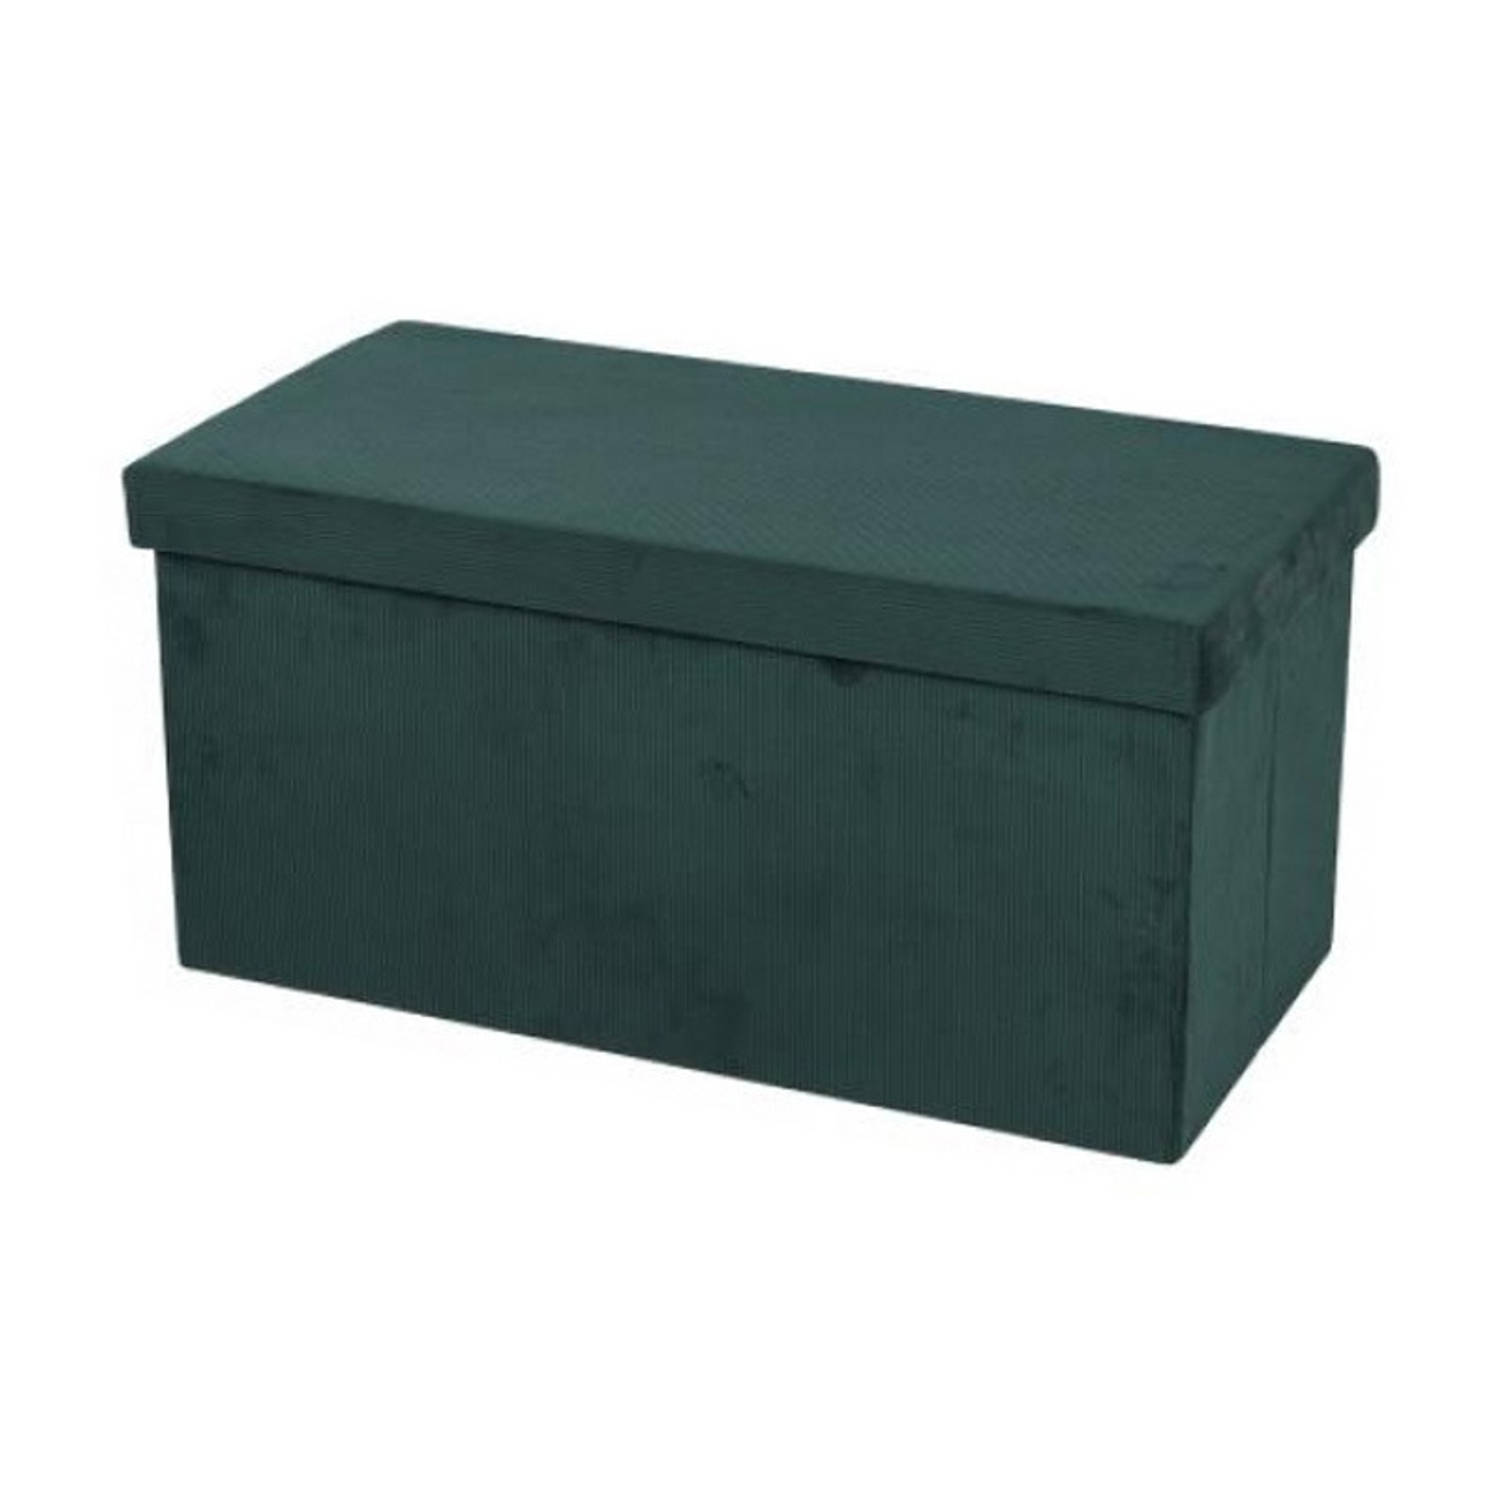 Hocker bank poef XXL opbergbox smaragd groen polyester-mdf 76 x 38 x 38 cm Poefs